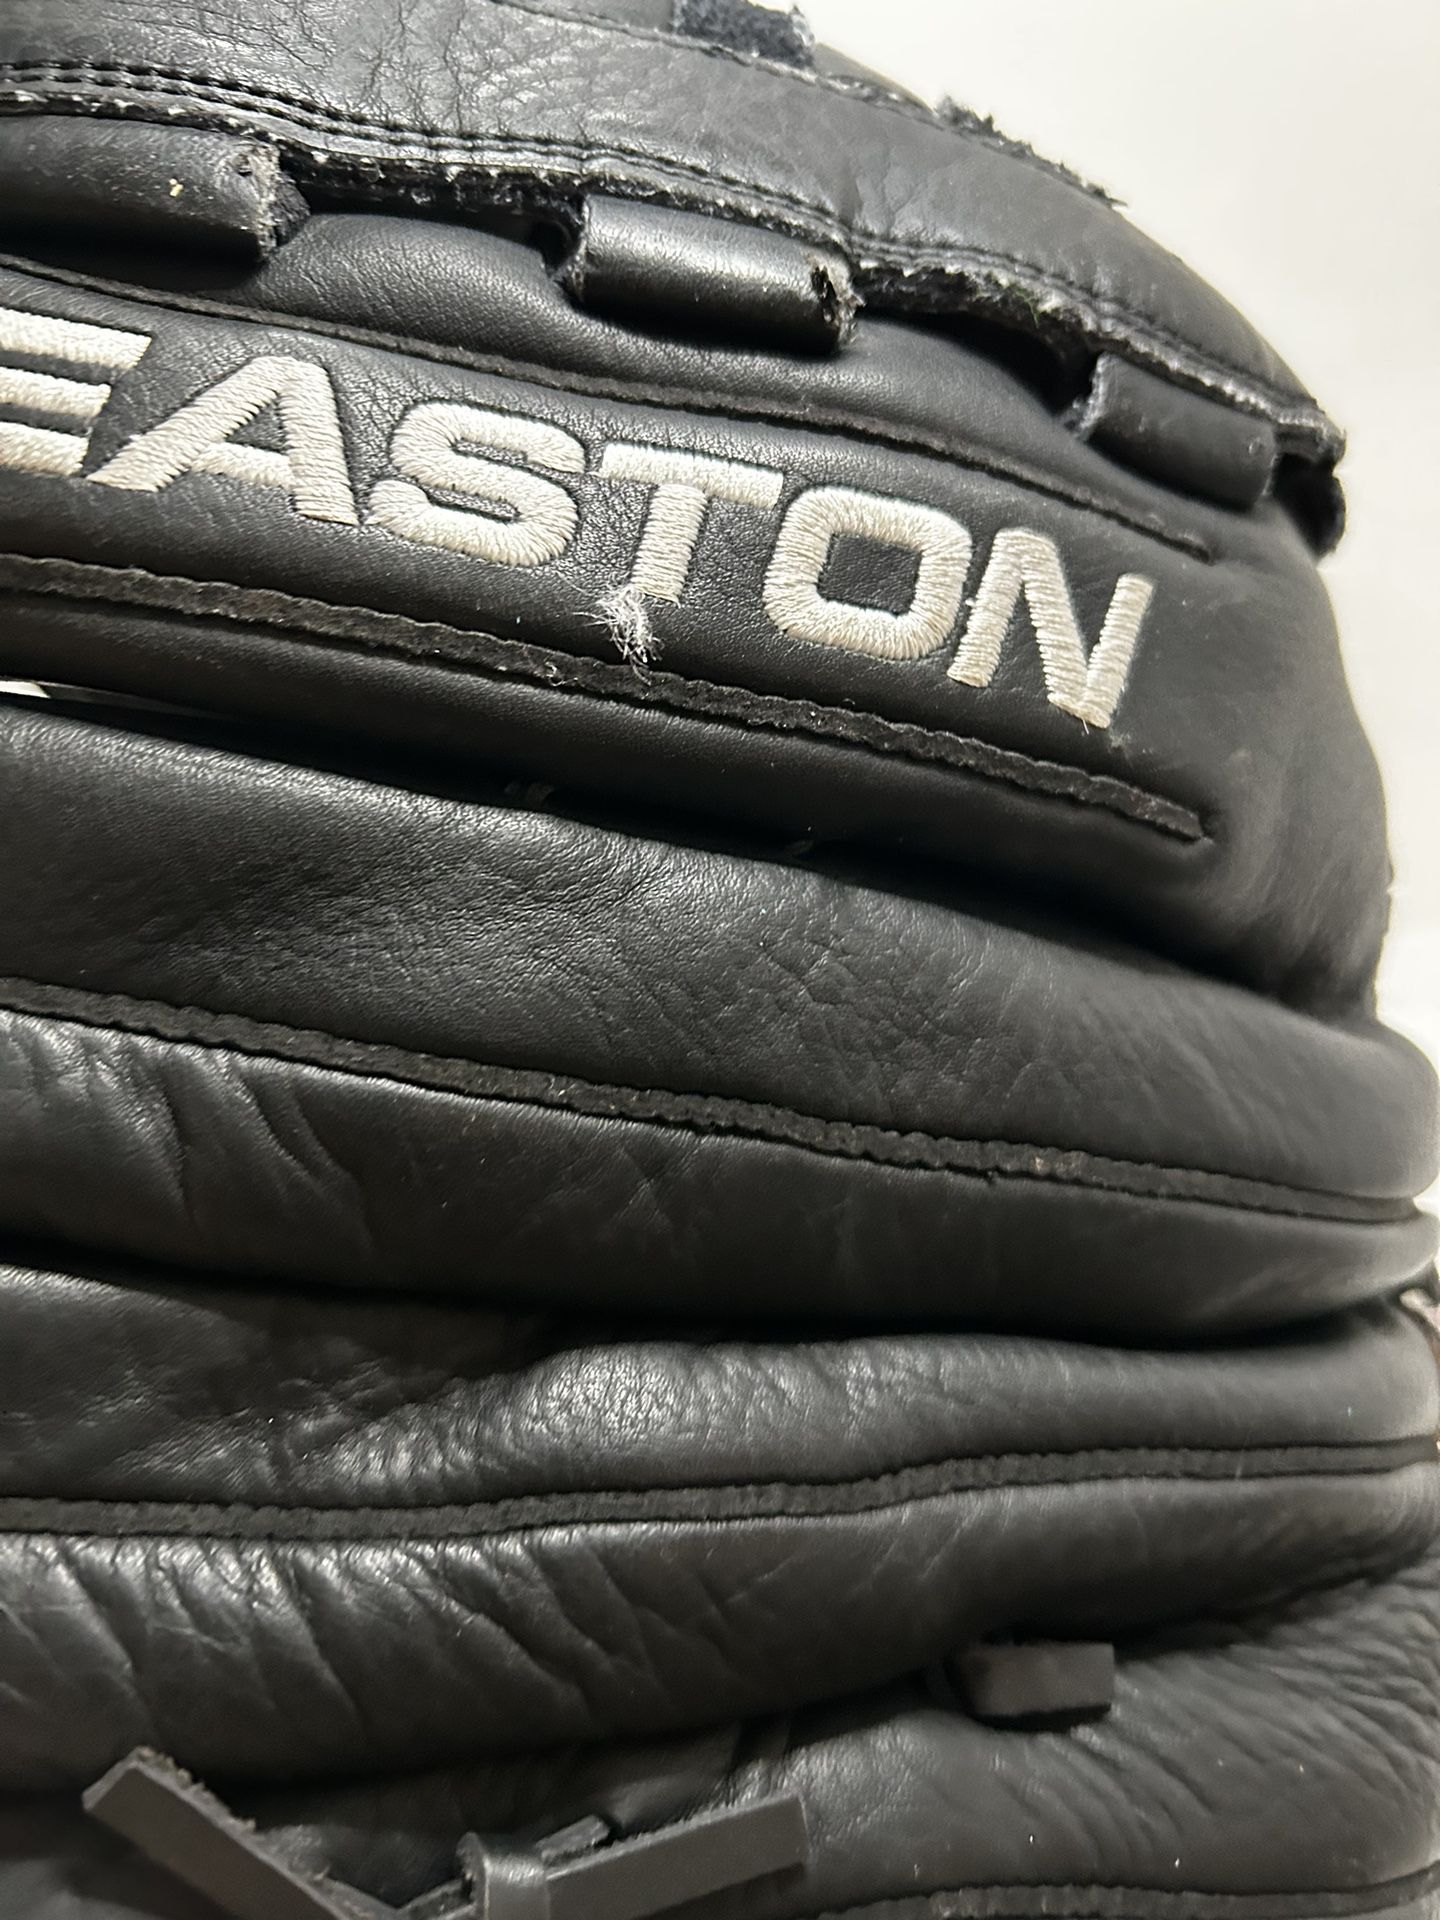 Easton BMX 143 RH Baseball Gloves 14” Pattern (open Box)